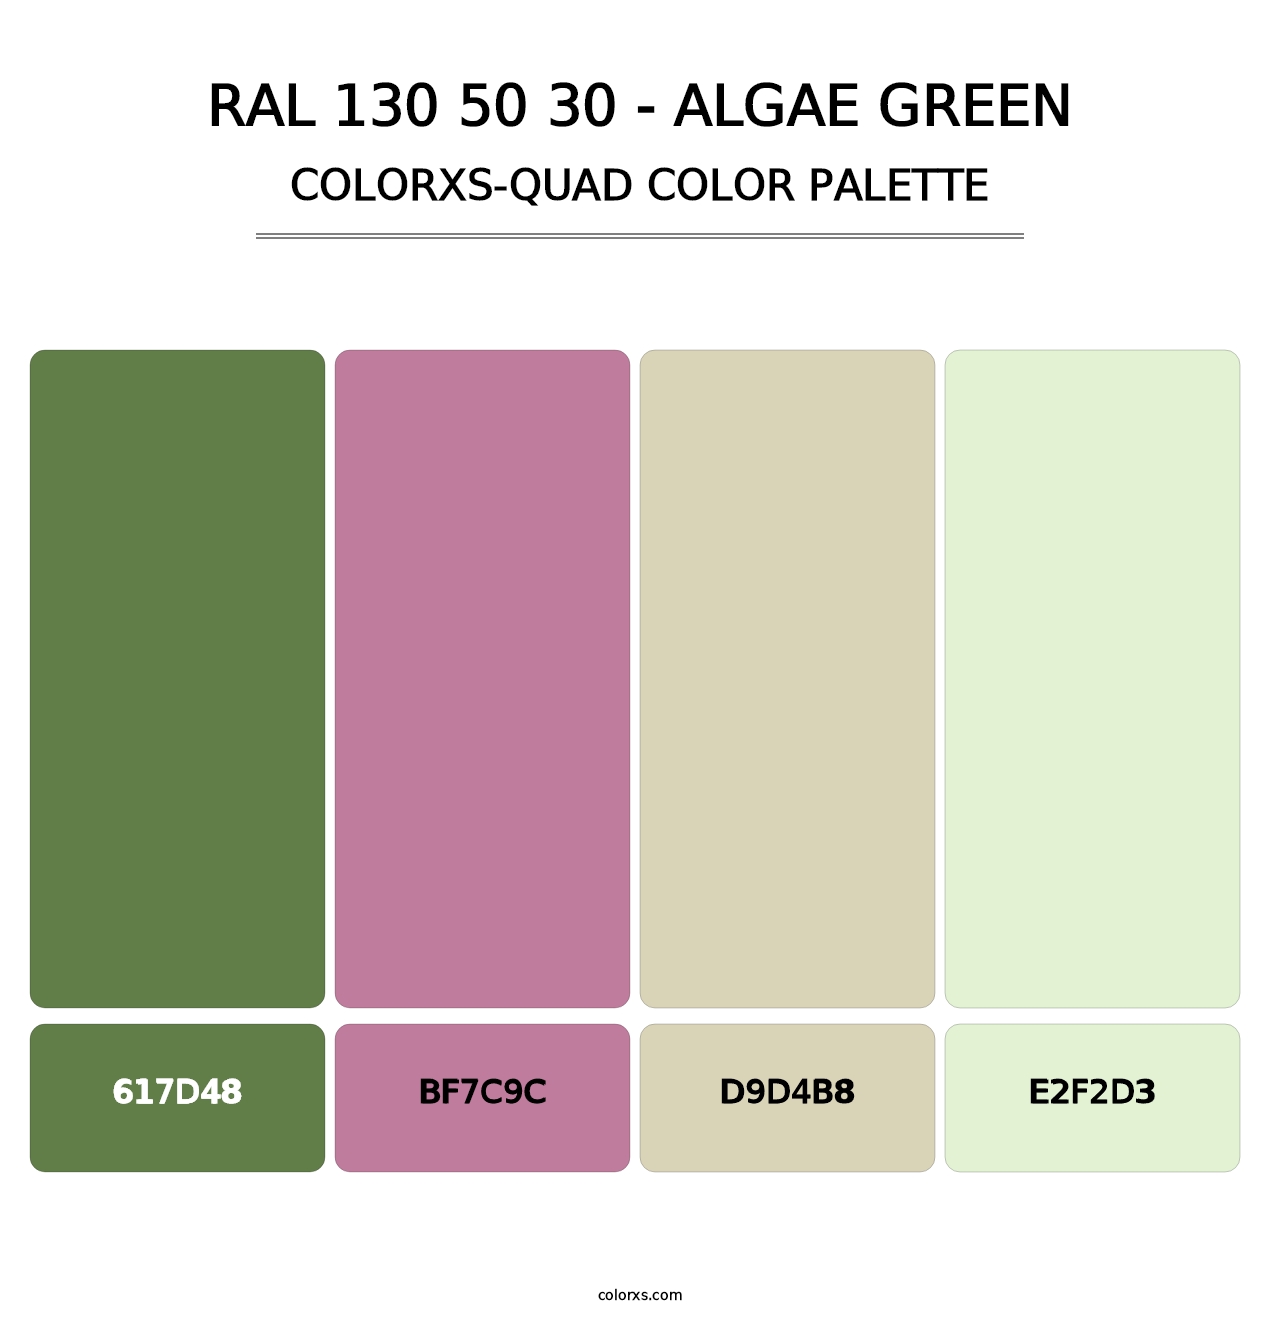 RAL 130 50 30 - Algae Green - Colorxs Quad Palette